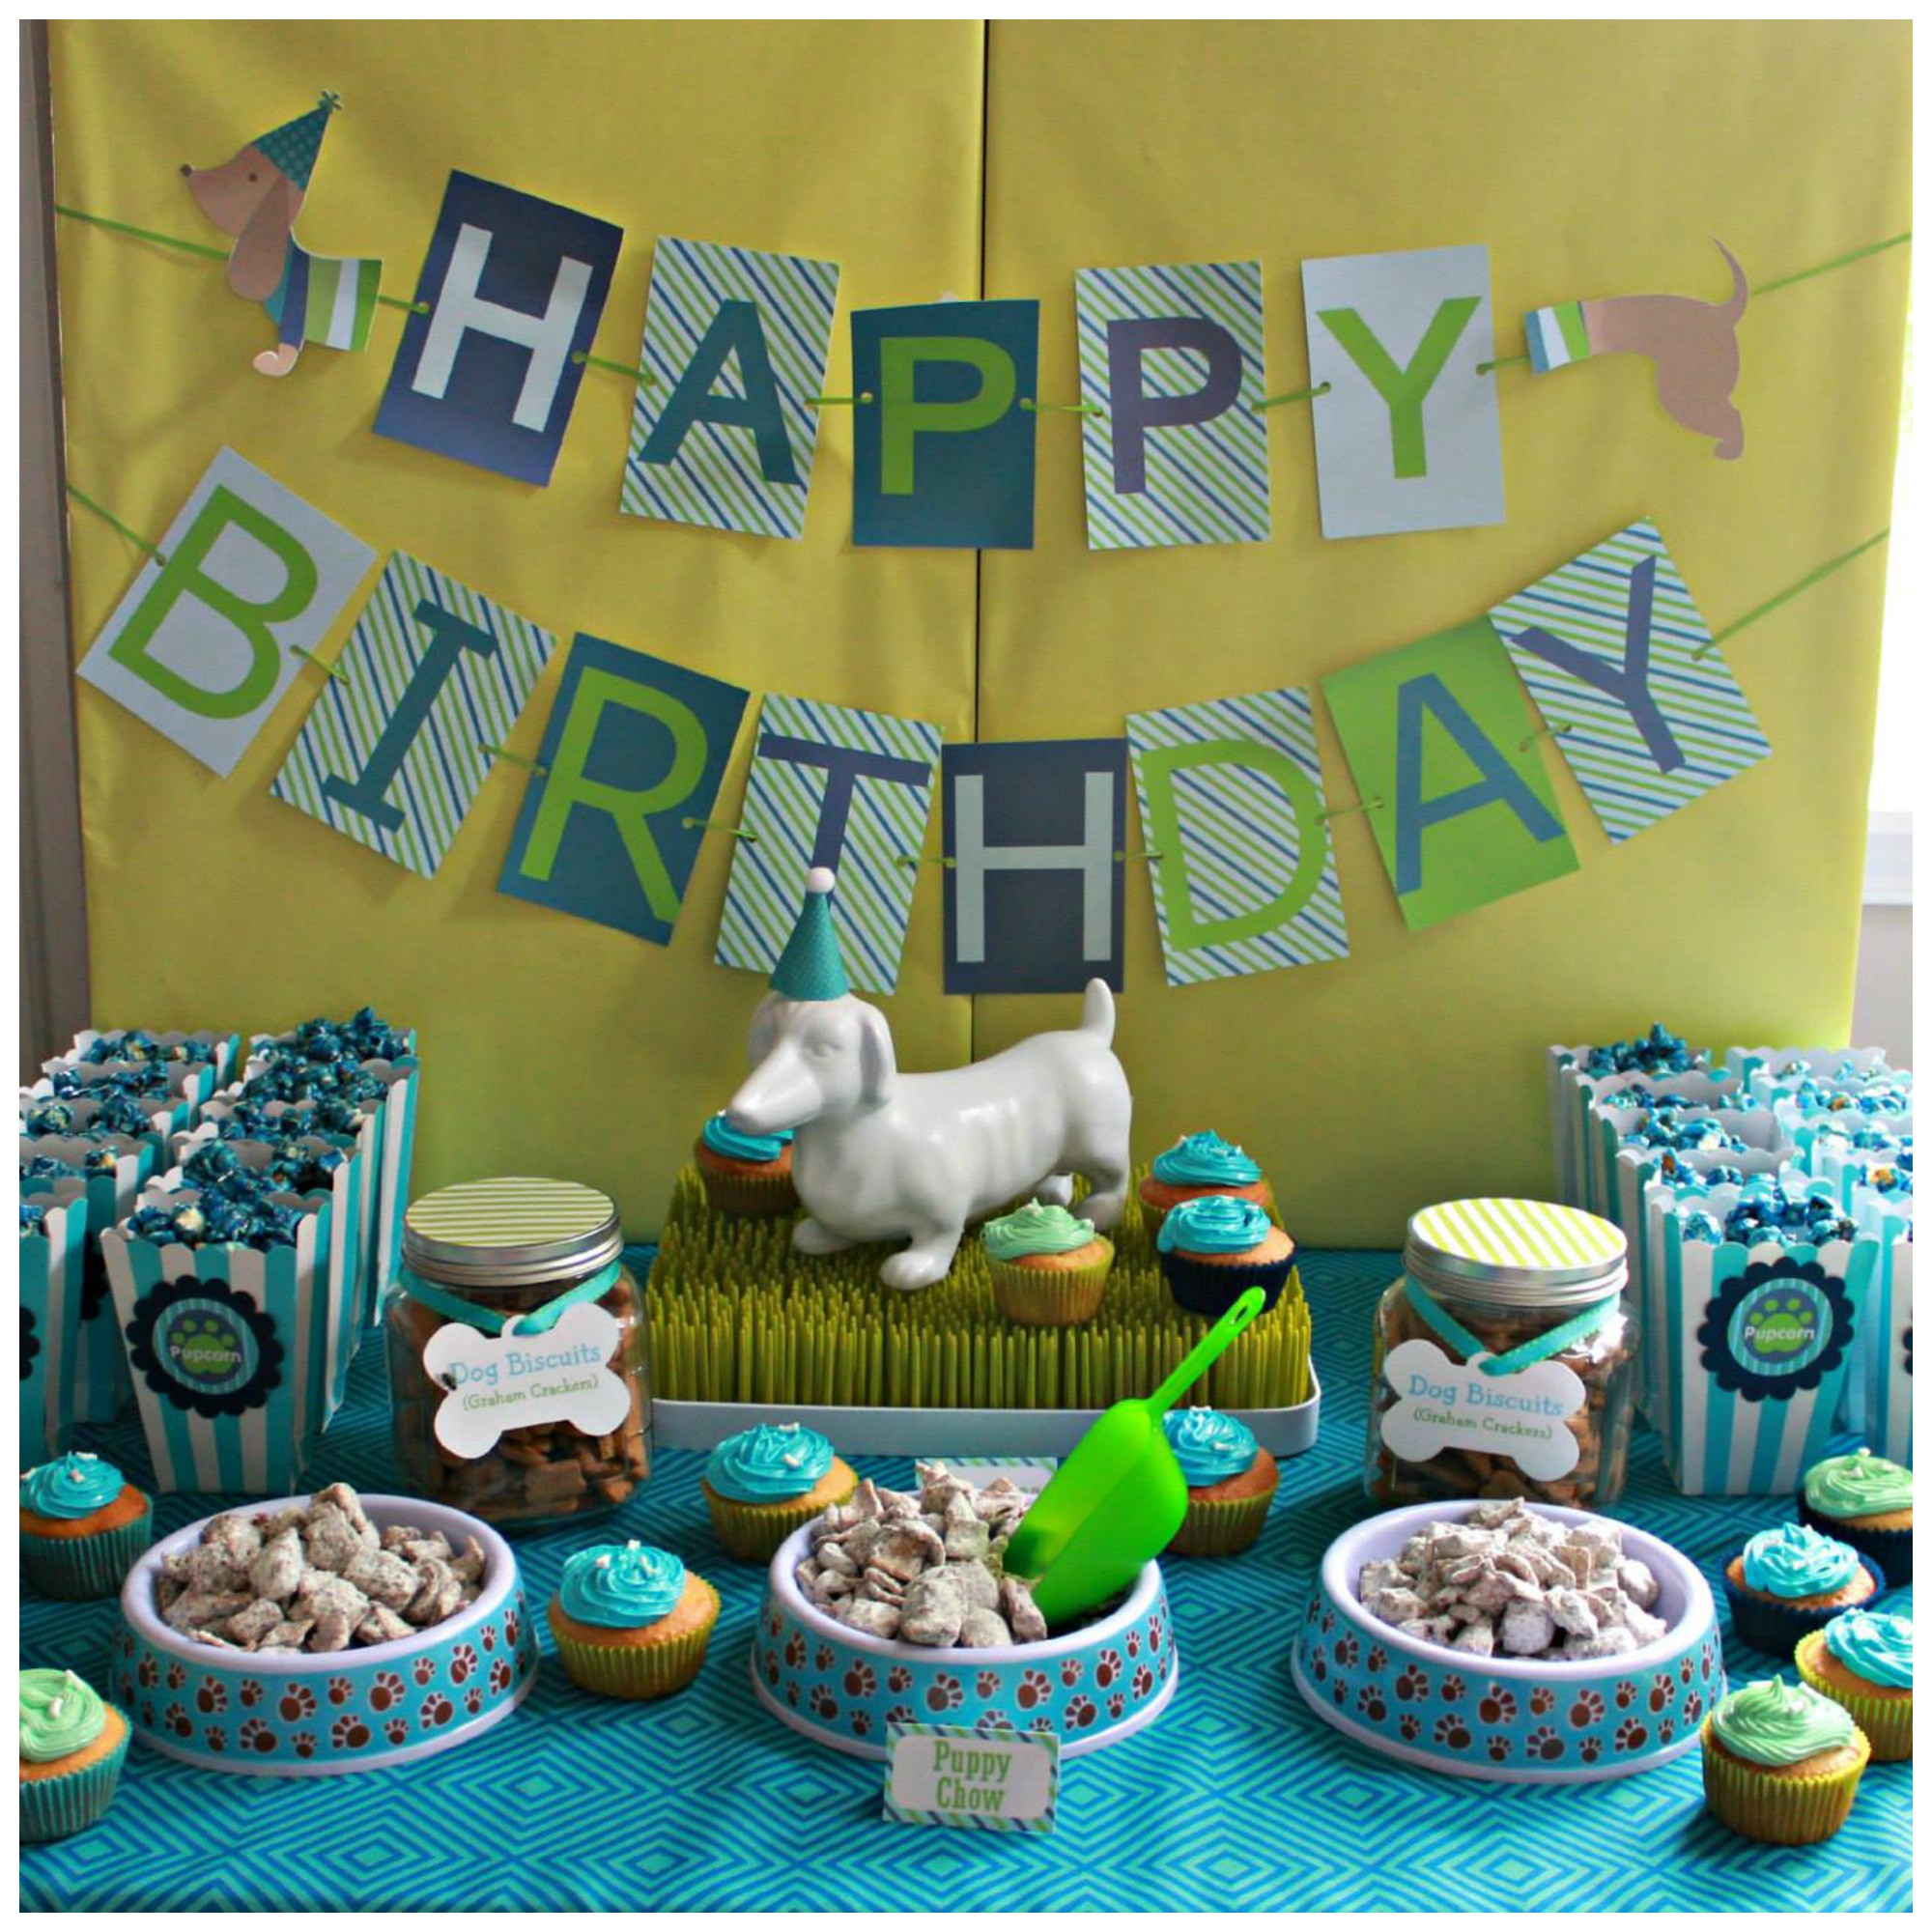 Dog Birthday Party Ideas
 Hot Dog Puppy 1st Birthday Party Project Nursery